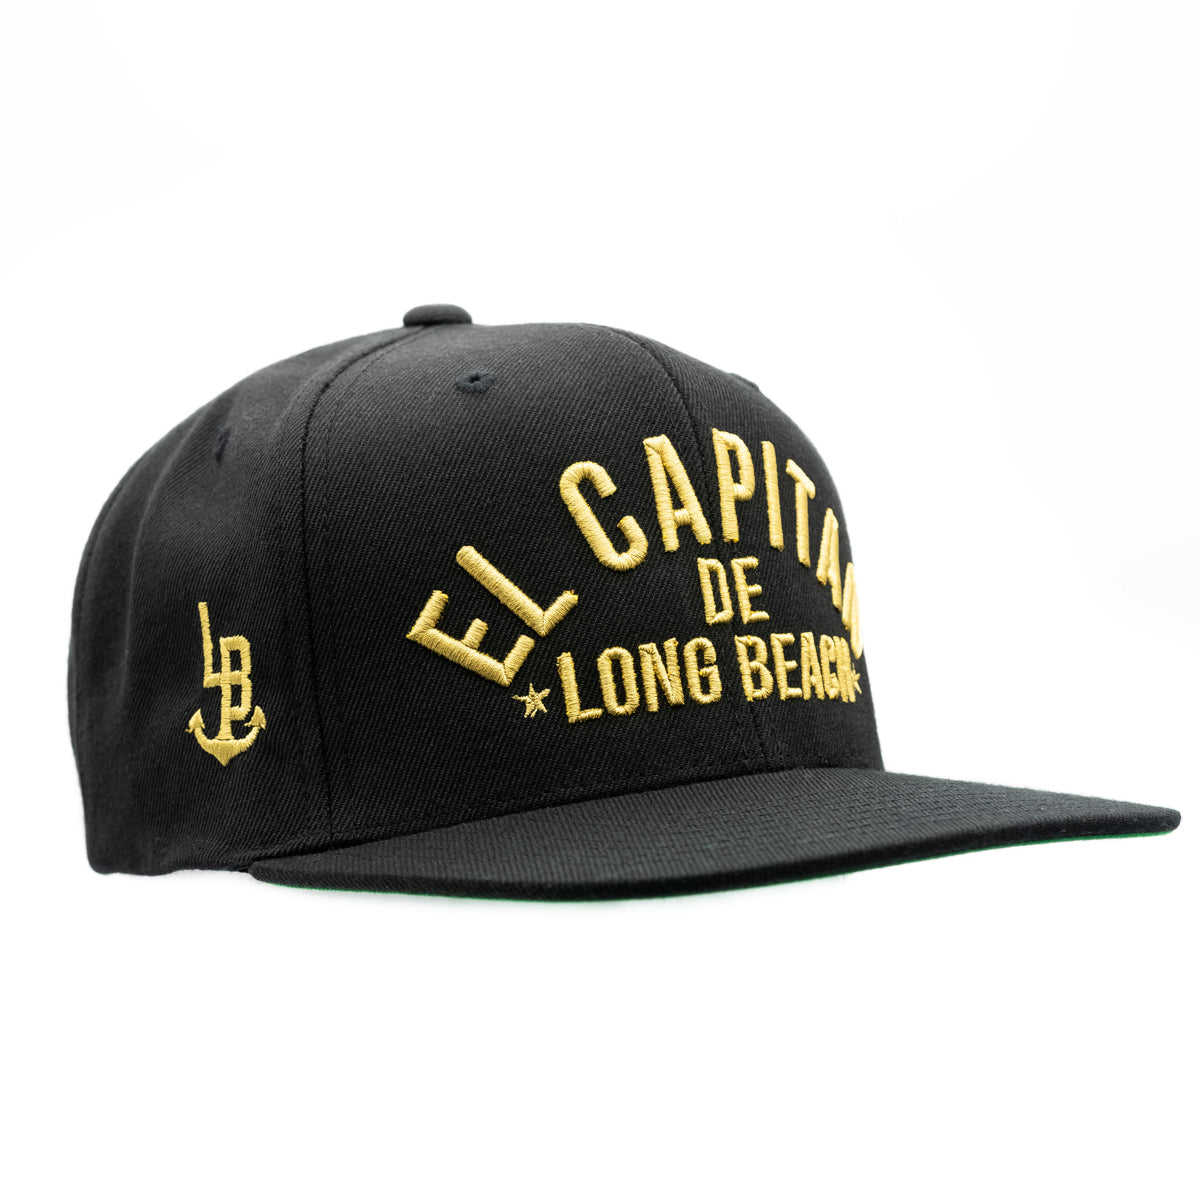 El Capitan De Long Beach – Stay Anchored-Lifestyle Brand